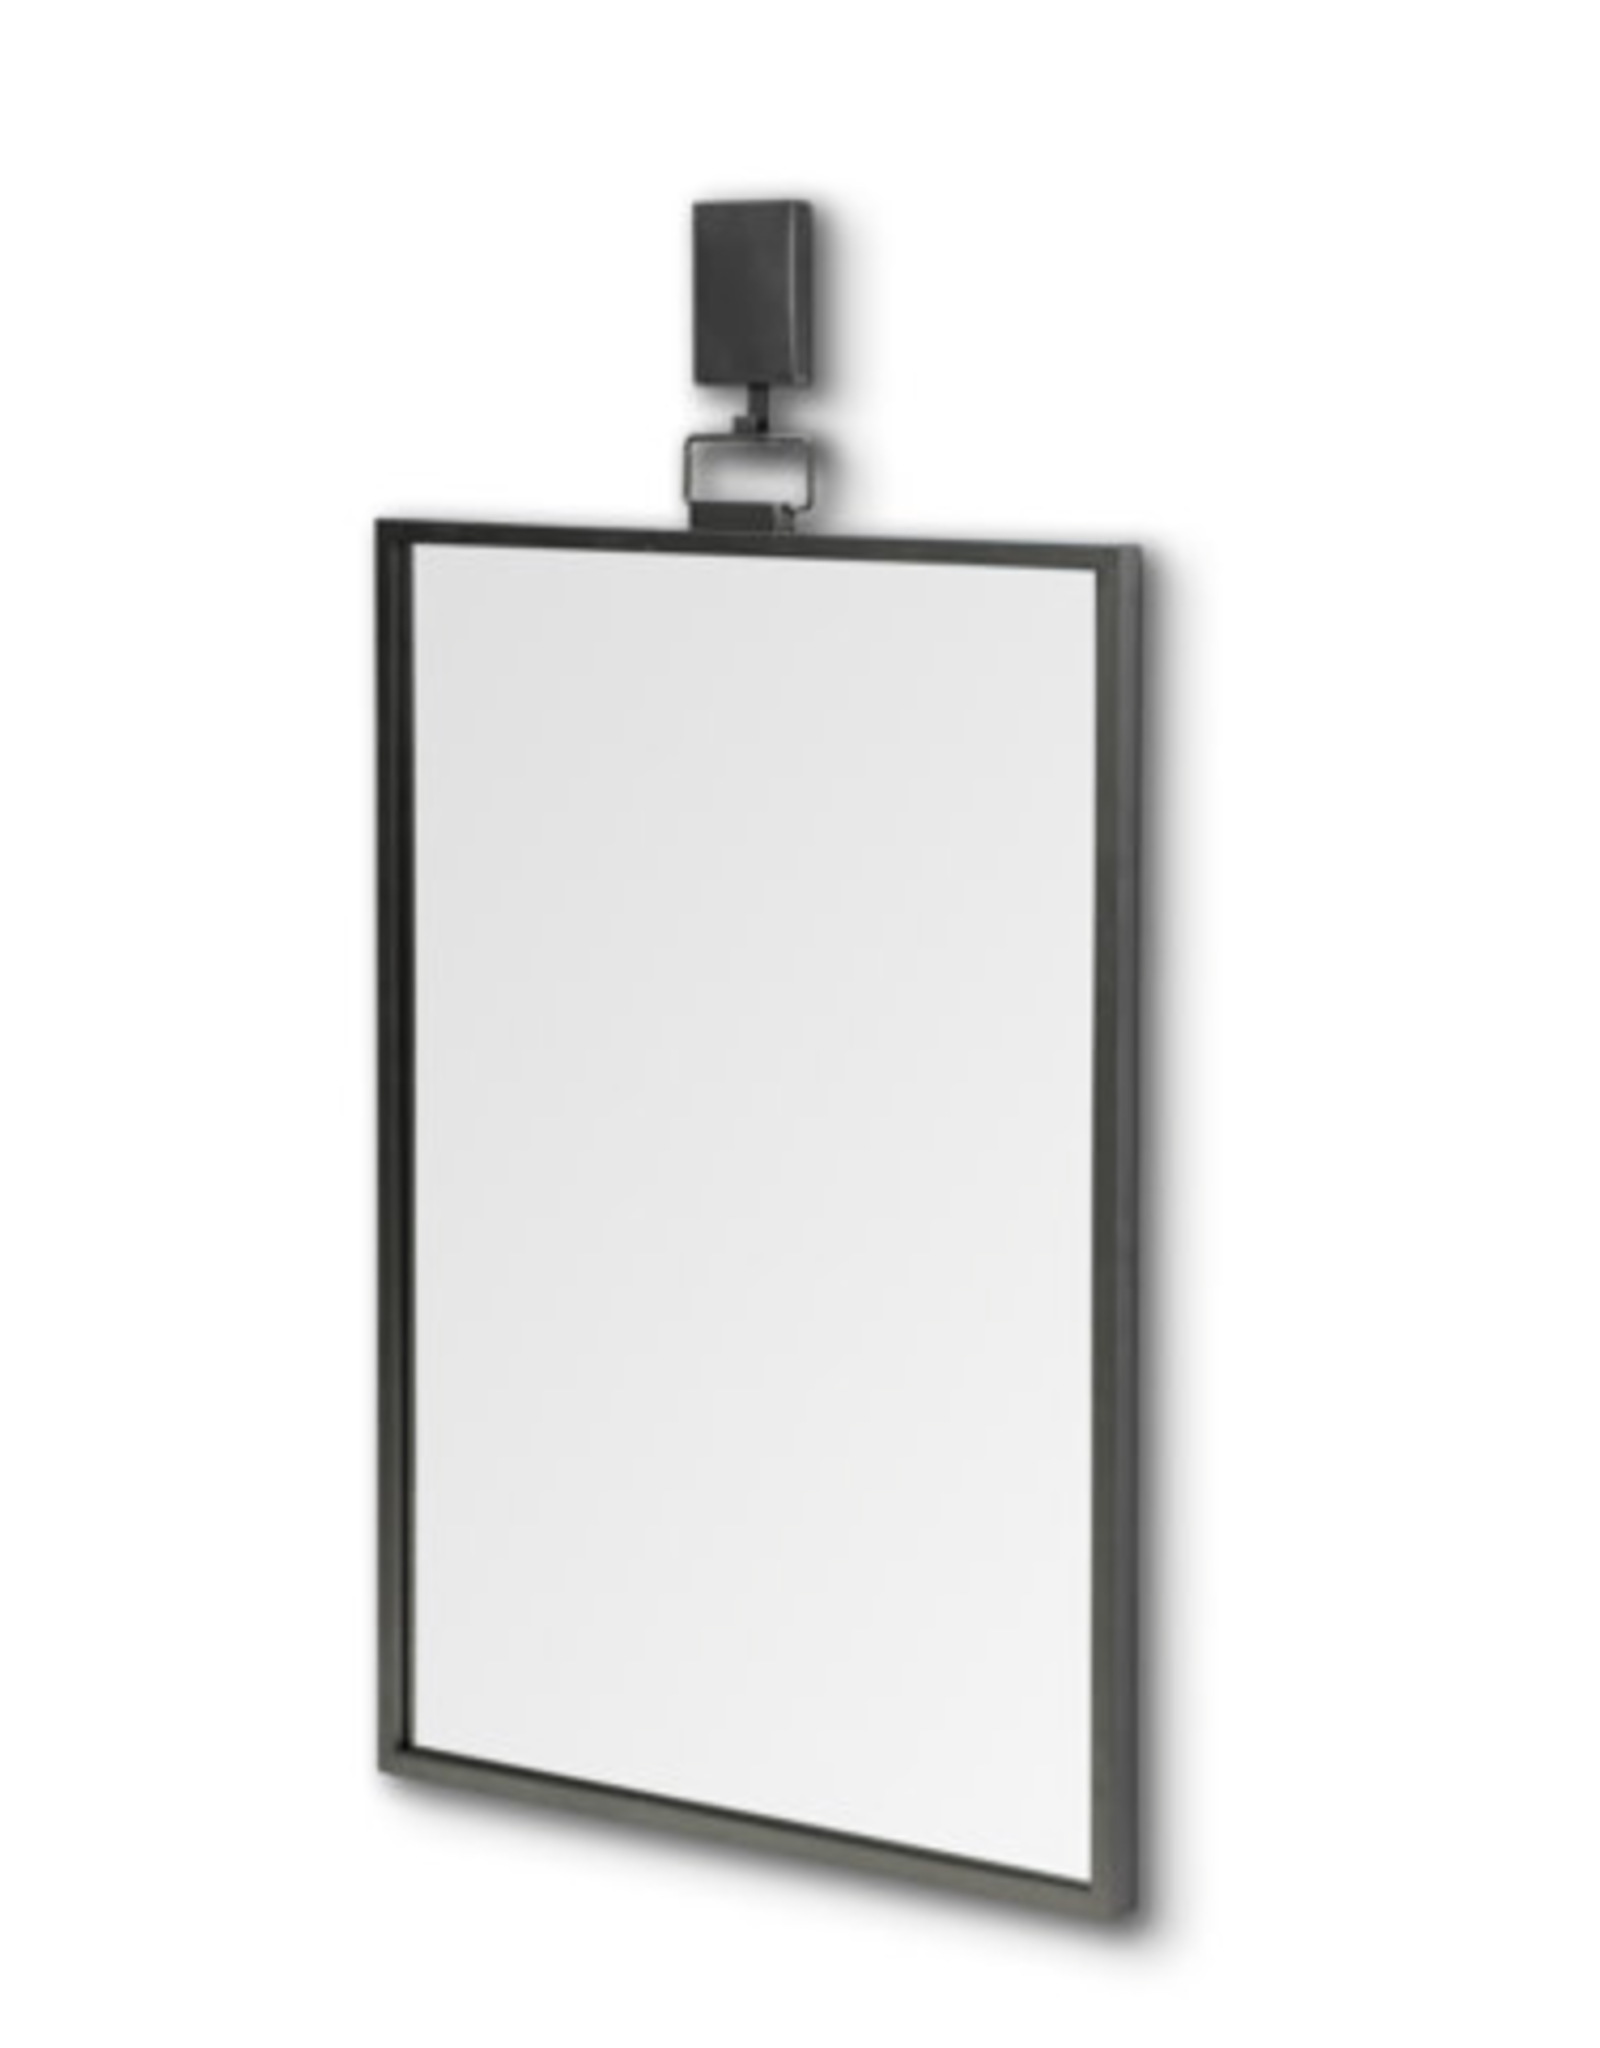 Grimm Metal Framed Mirror